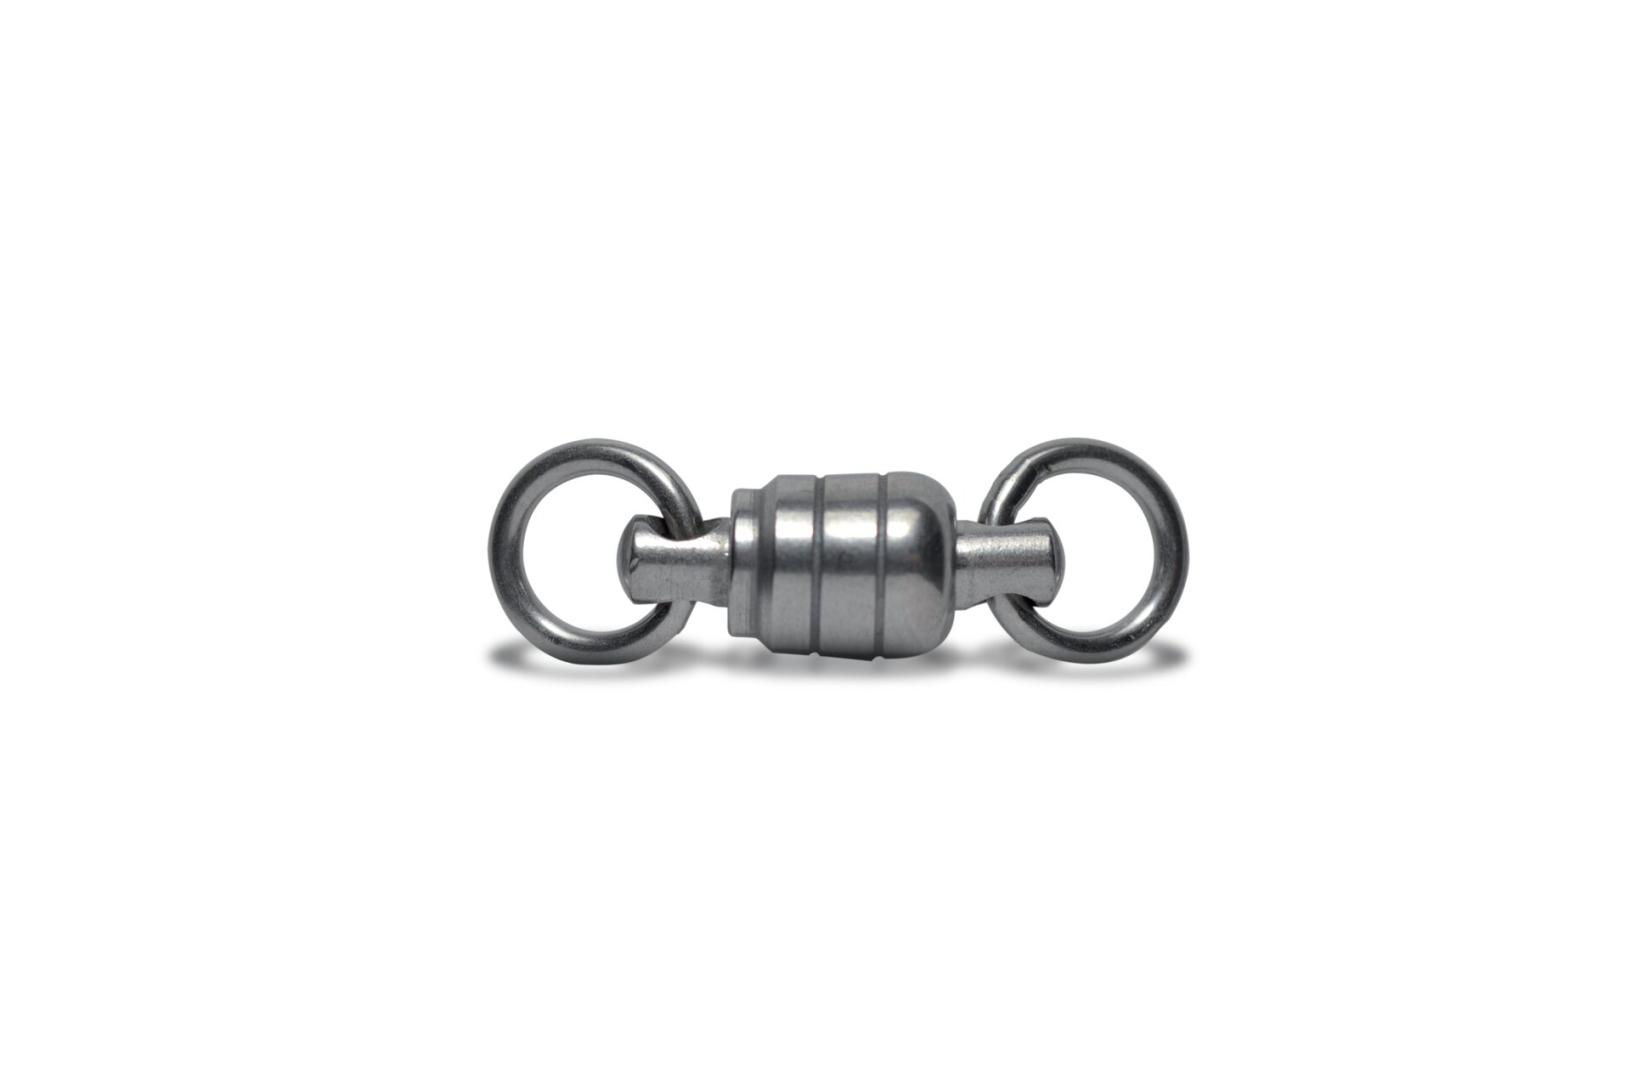 https://vmc-hooks.com/sites/default/files/styles/hd_libre/public/pimcore/photo-3260-stainless-ball-bearing-swivel-with-2-welded-rings.jpg?itok=ik4r4TRj